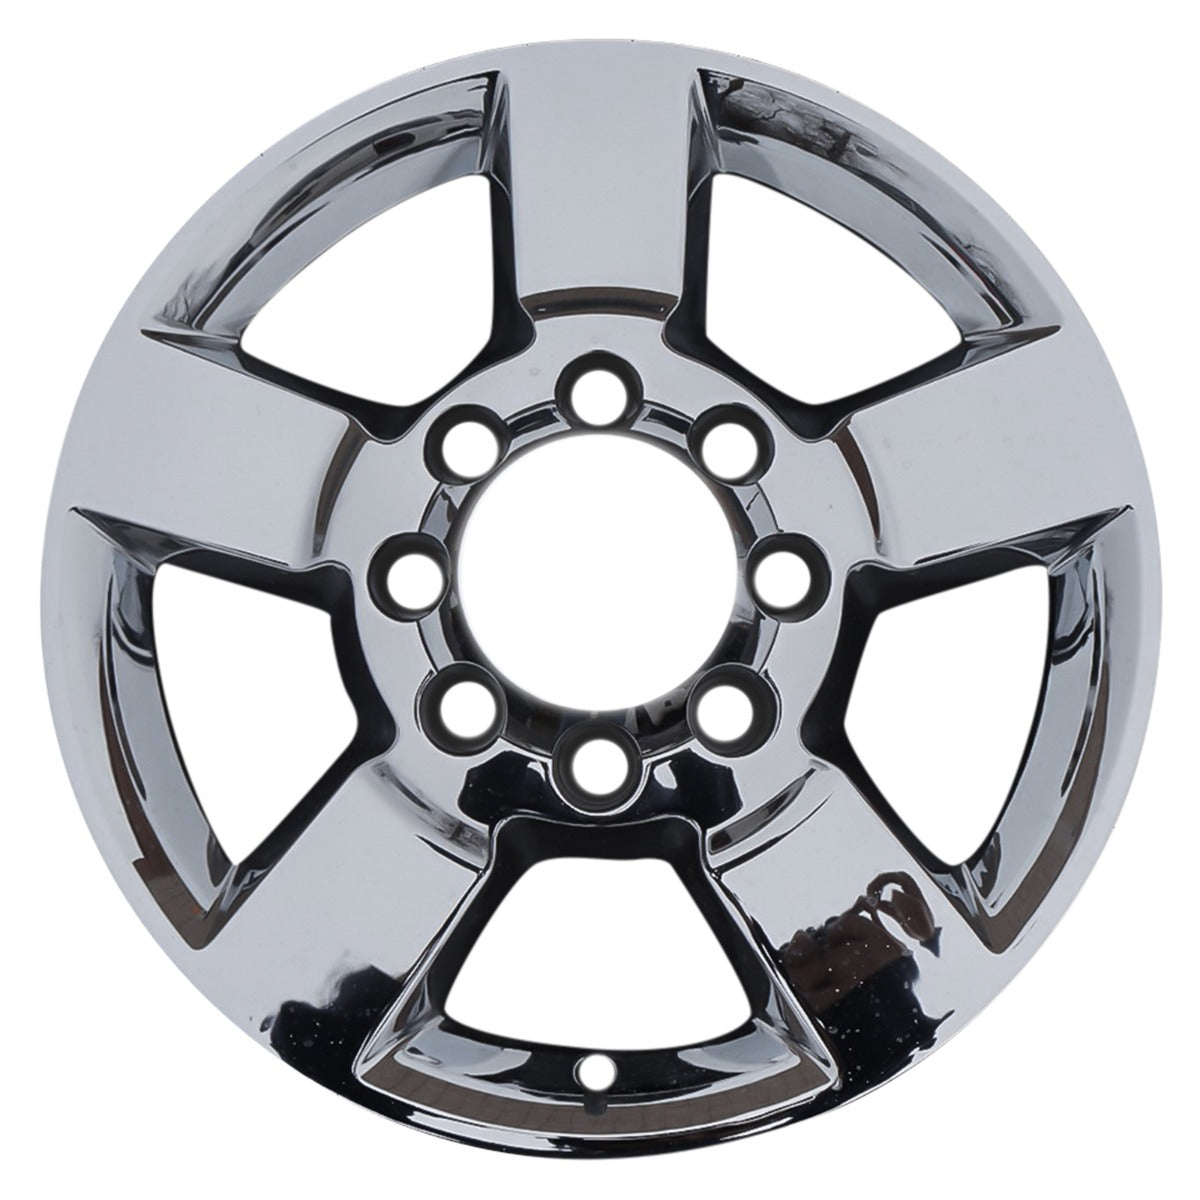 2015 GMC Sierra 2500 New 20" Replacement Wheel Rim RW5771CHR